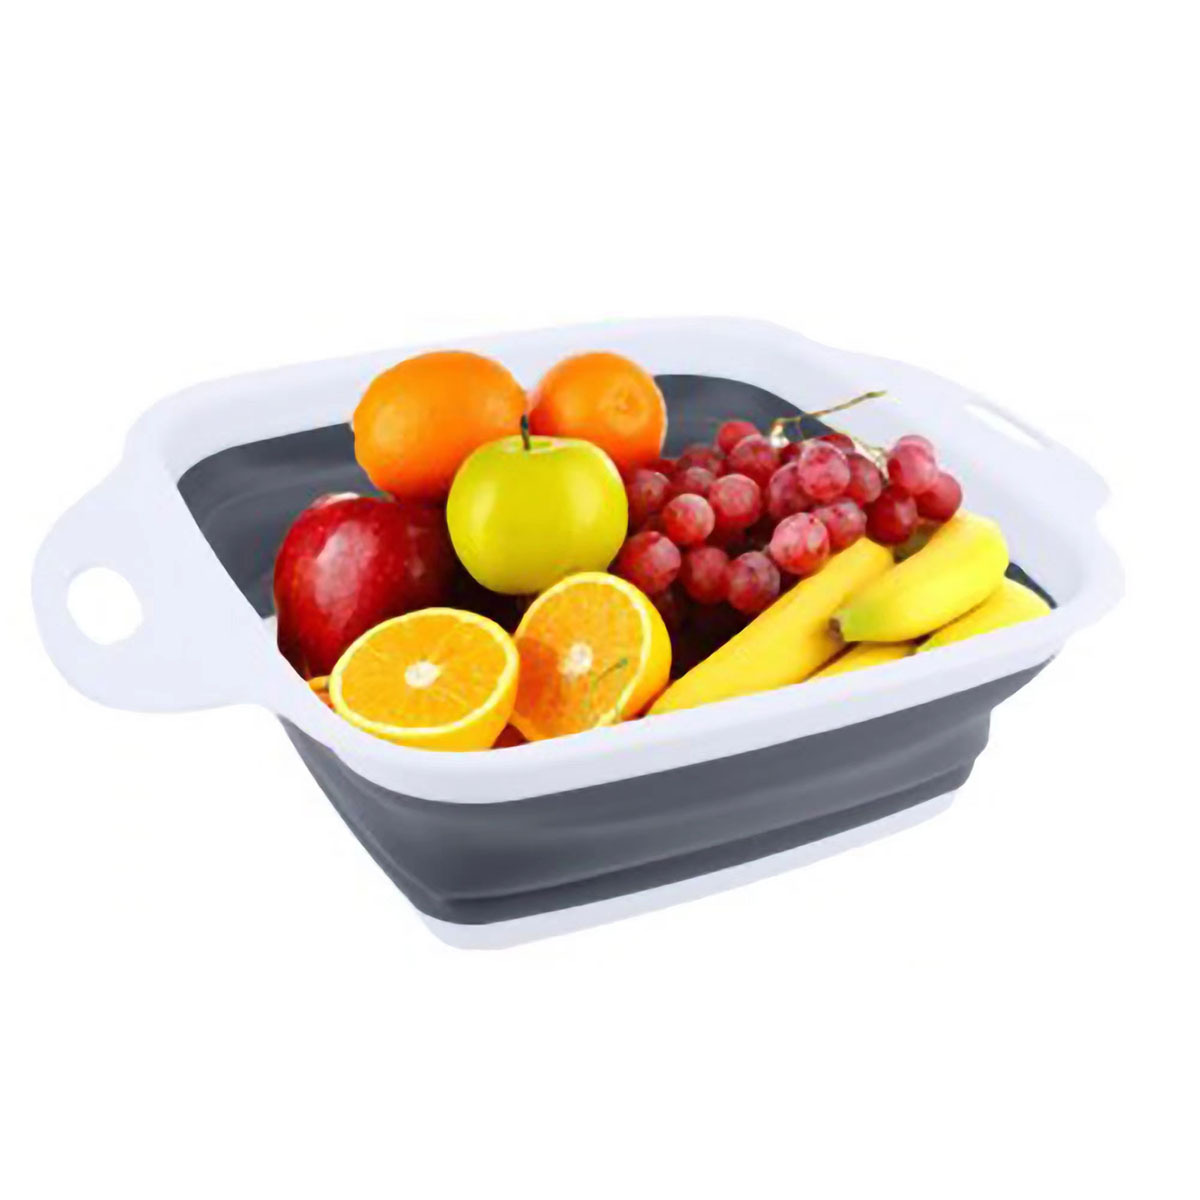 

Square Drain Basket, Kitchen Gadgets, Sink Drain Filter, Storage Bag Fruit & Vegetable Basket, Foldable Filter, Collapsible Colander Spoon, Silicone Kitchen Household Essentials